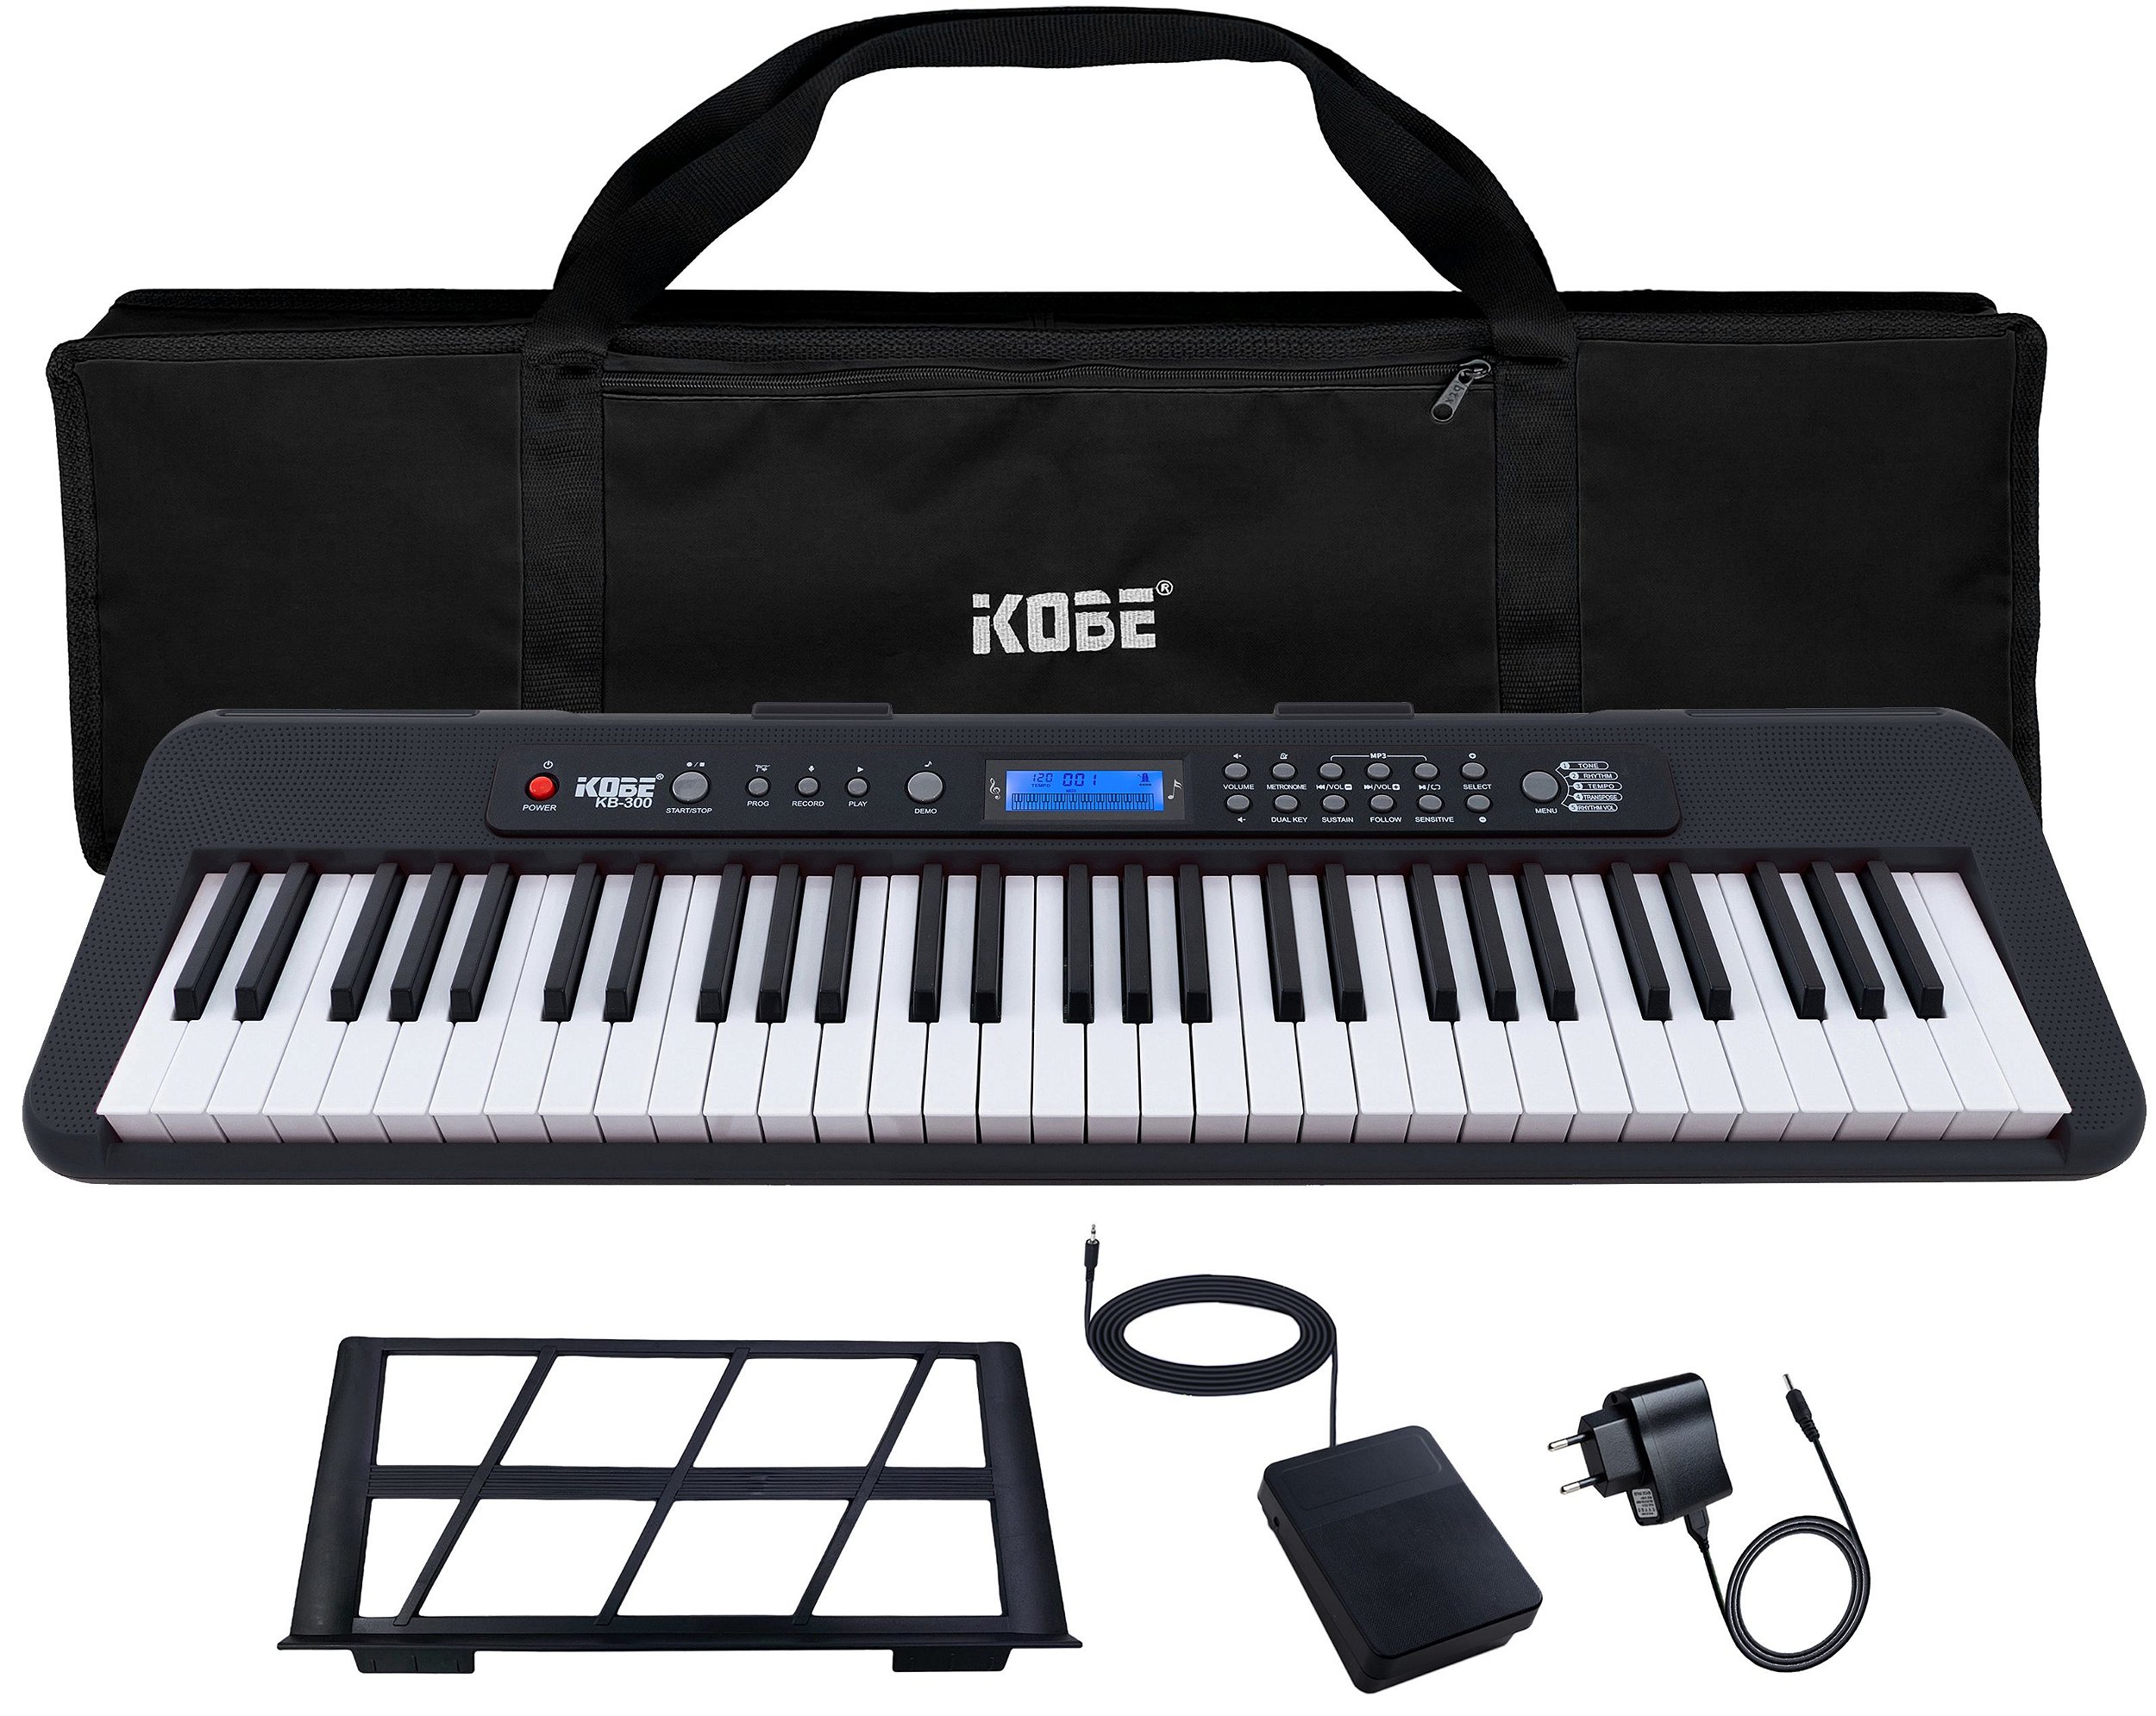 Kit Teclado Musical Arranjador Kobe KB-300 5/8 61 Teclas Sensitivas ao  Toque com Pedal Sustain e Capa Preta - Meu Teclado